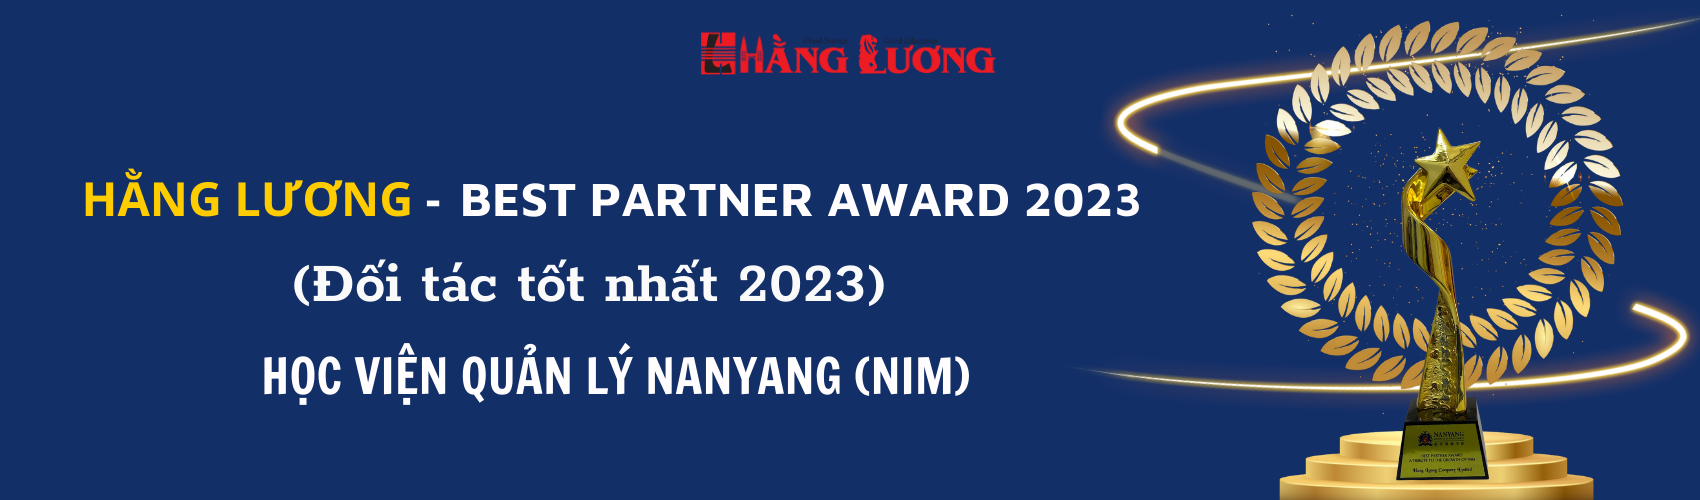 Nanyang Institute Management Hang Luong Best Partner 2023